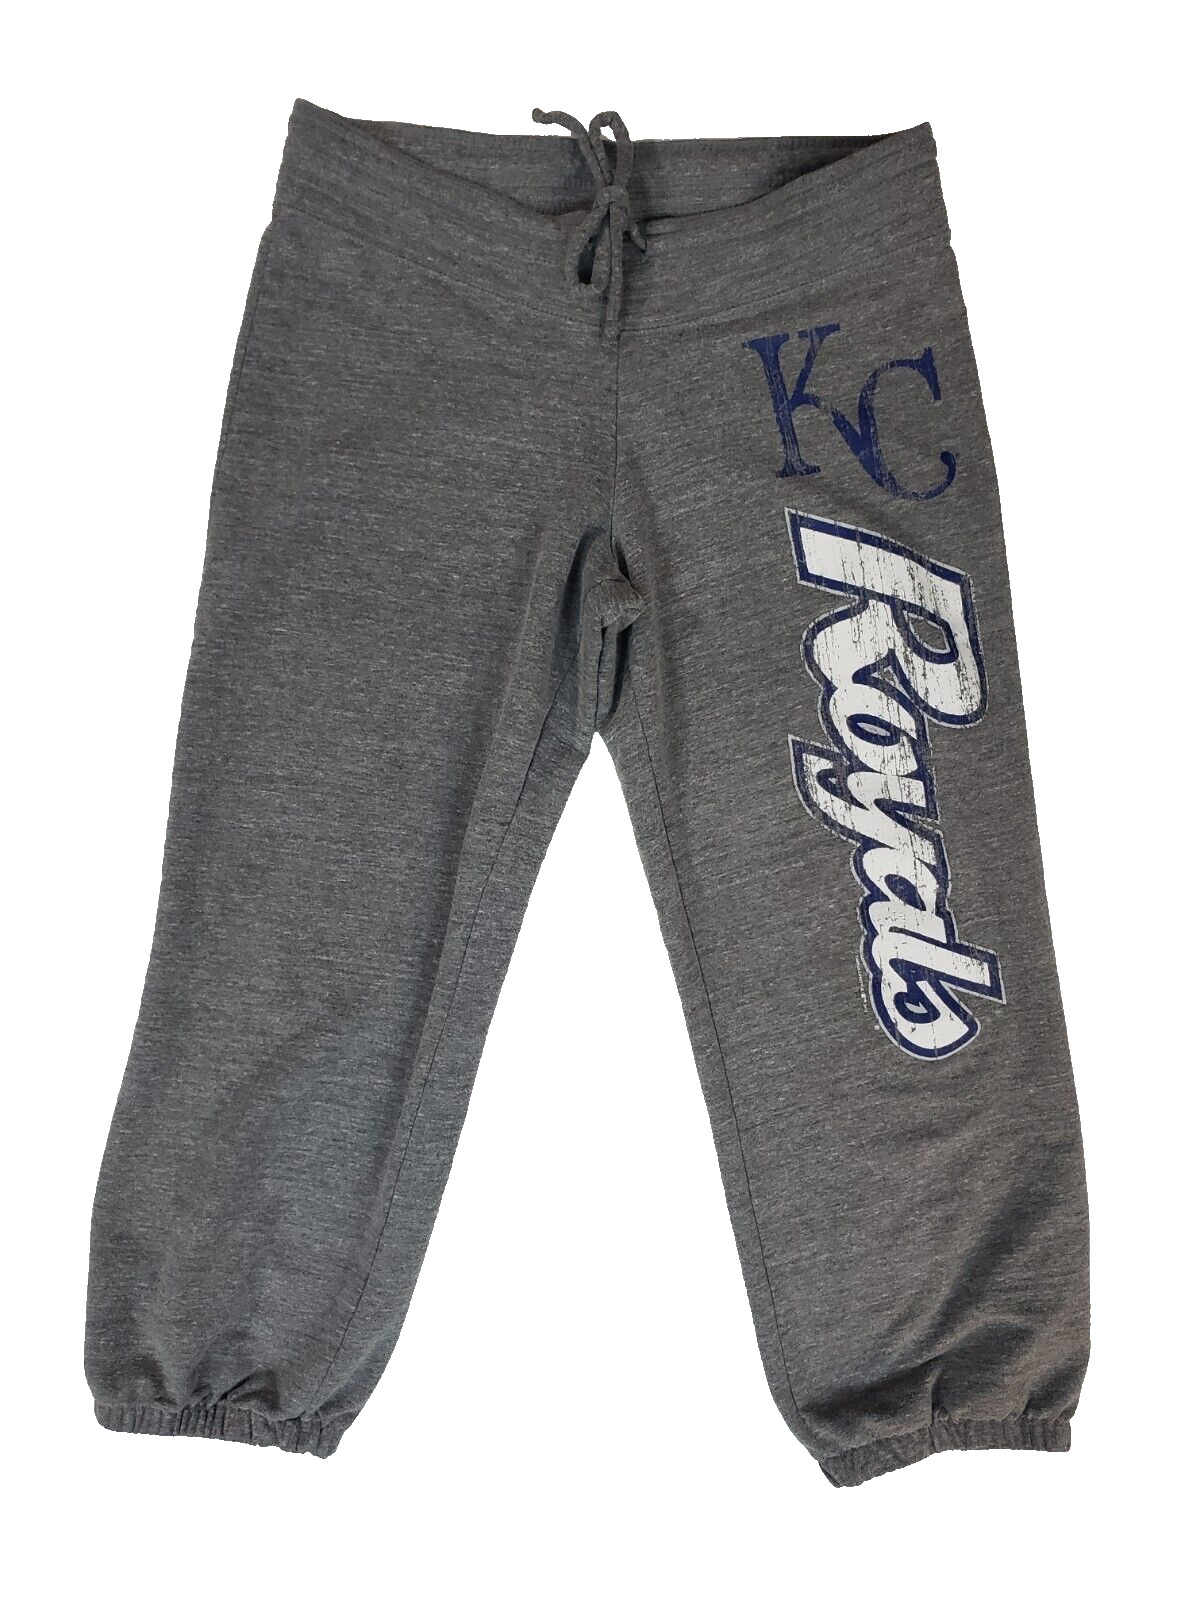 KC Royals Sweatpants MLB Genuine Merchandise Capri Length Gray Women\'s Medium